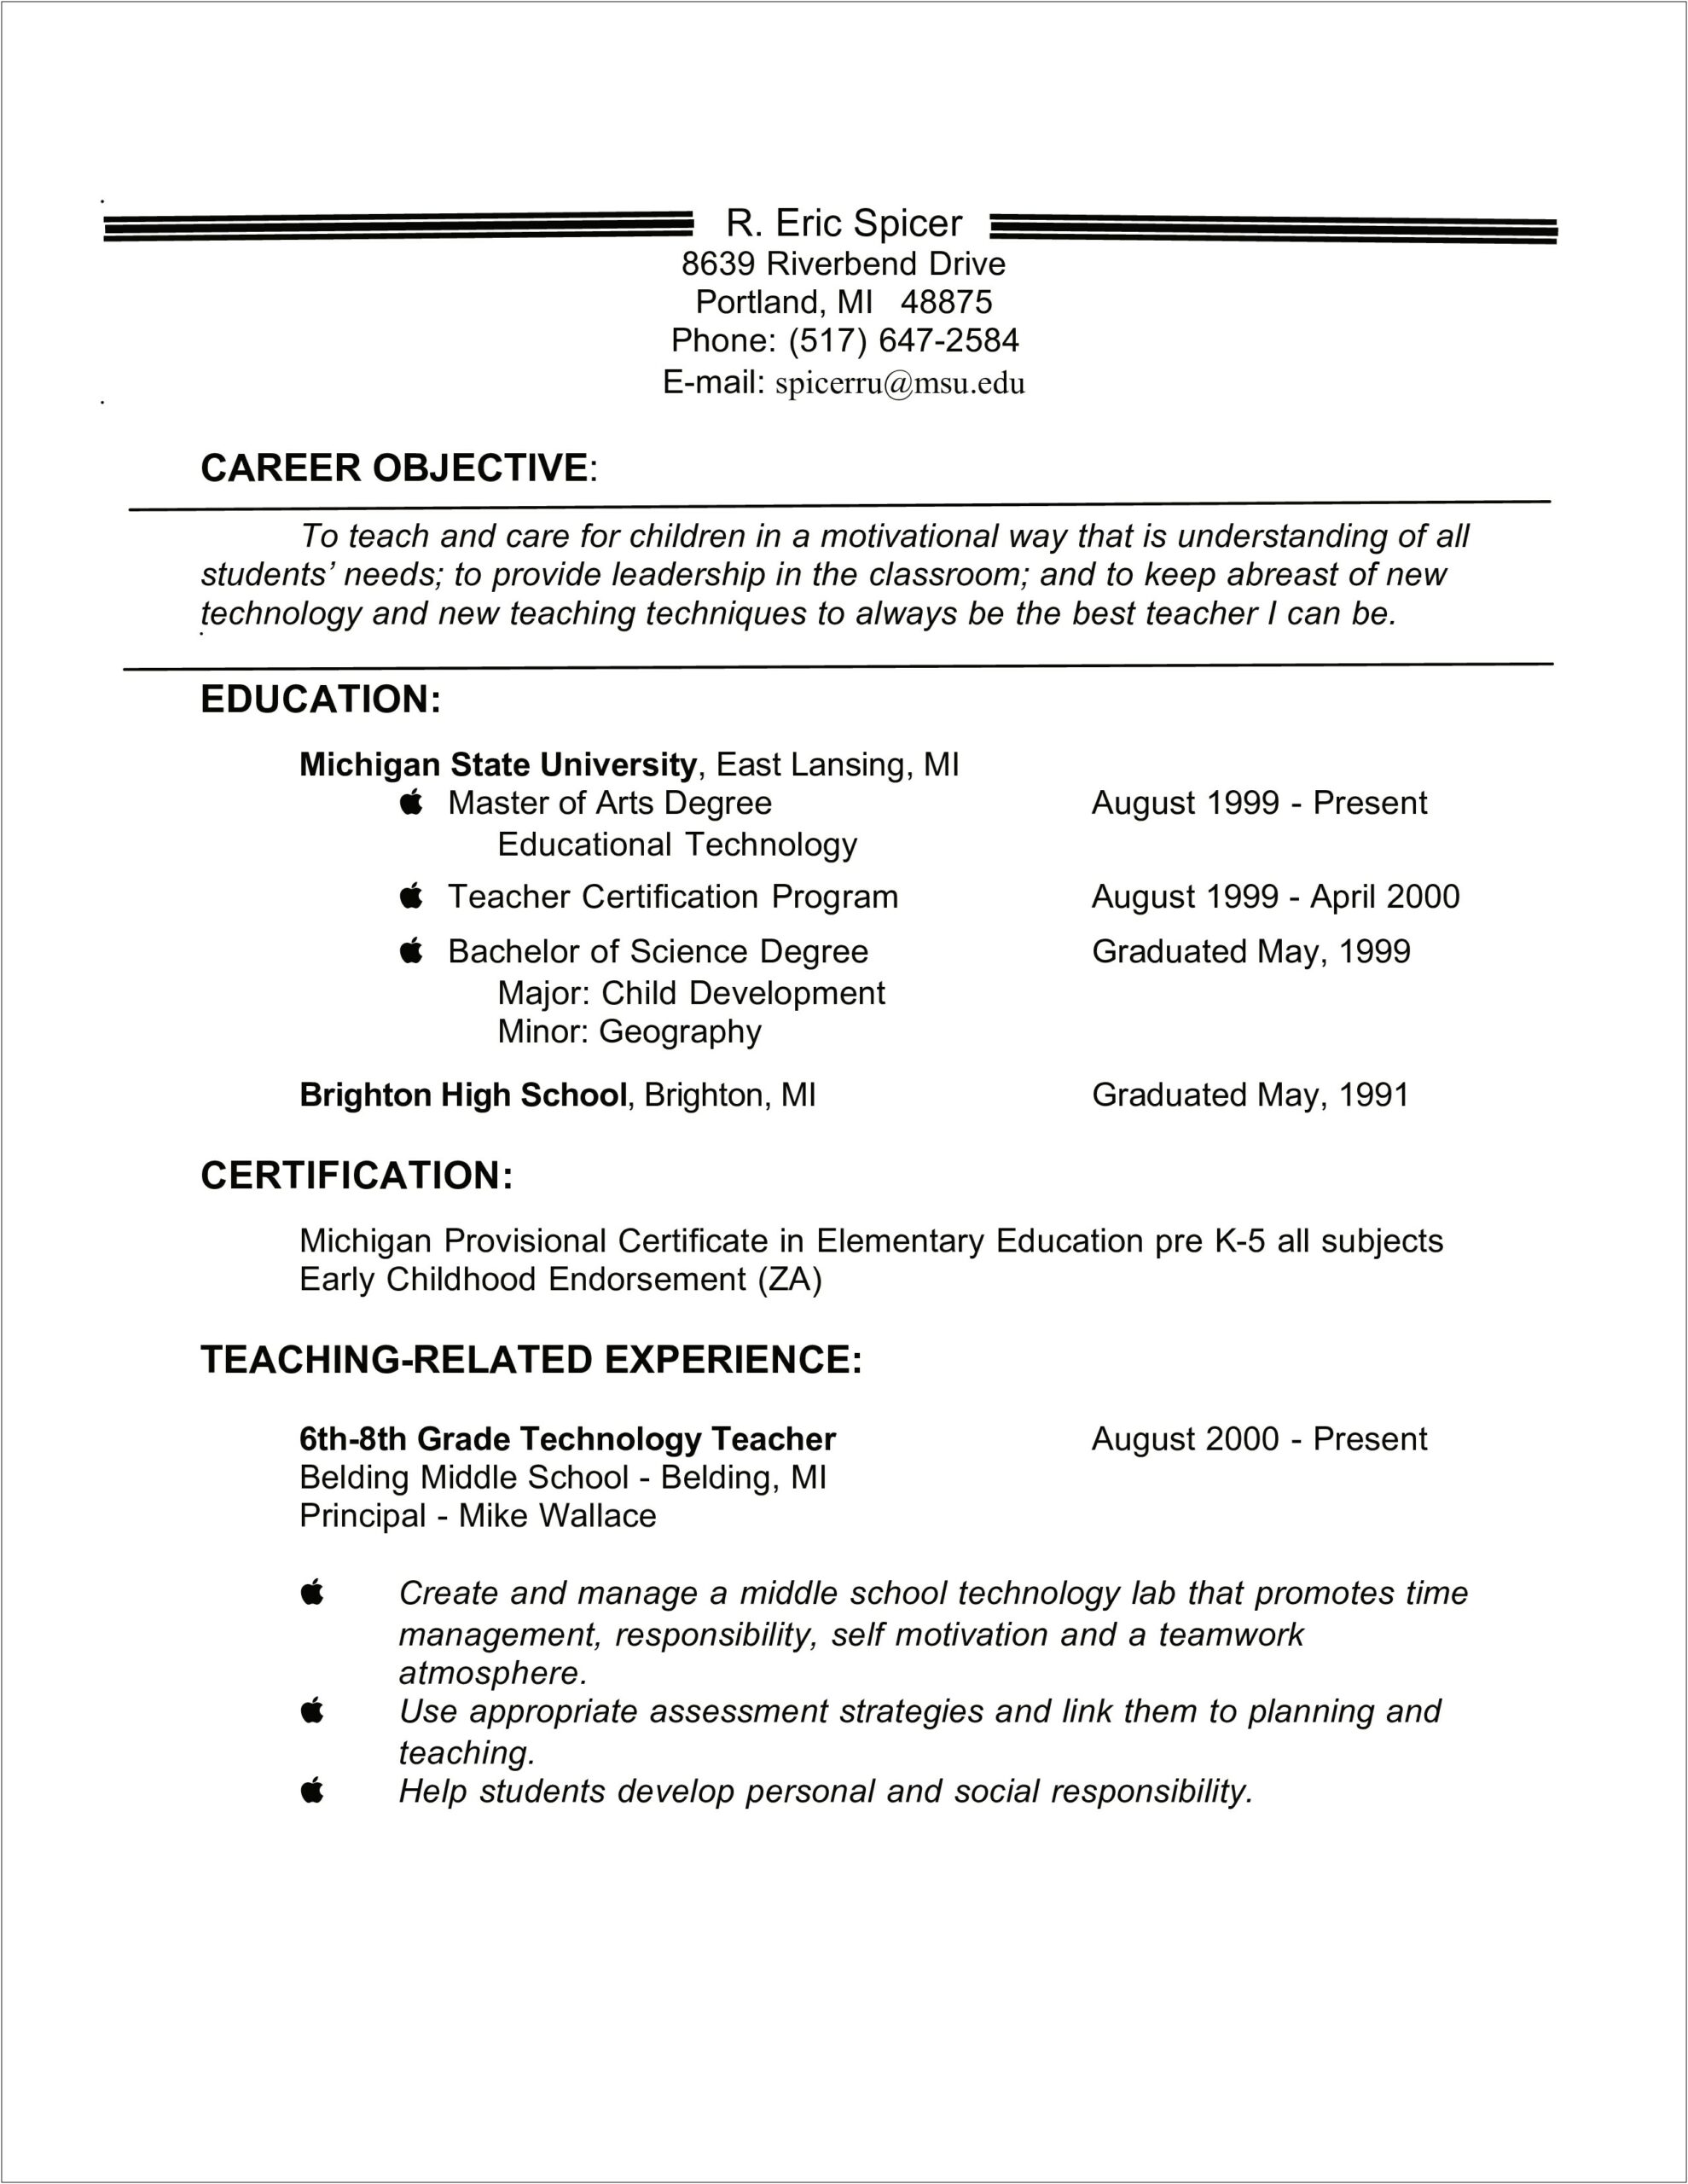 Resume Objective For Stem Student